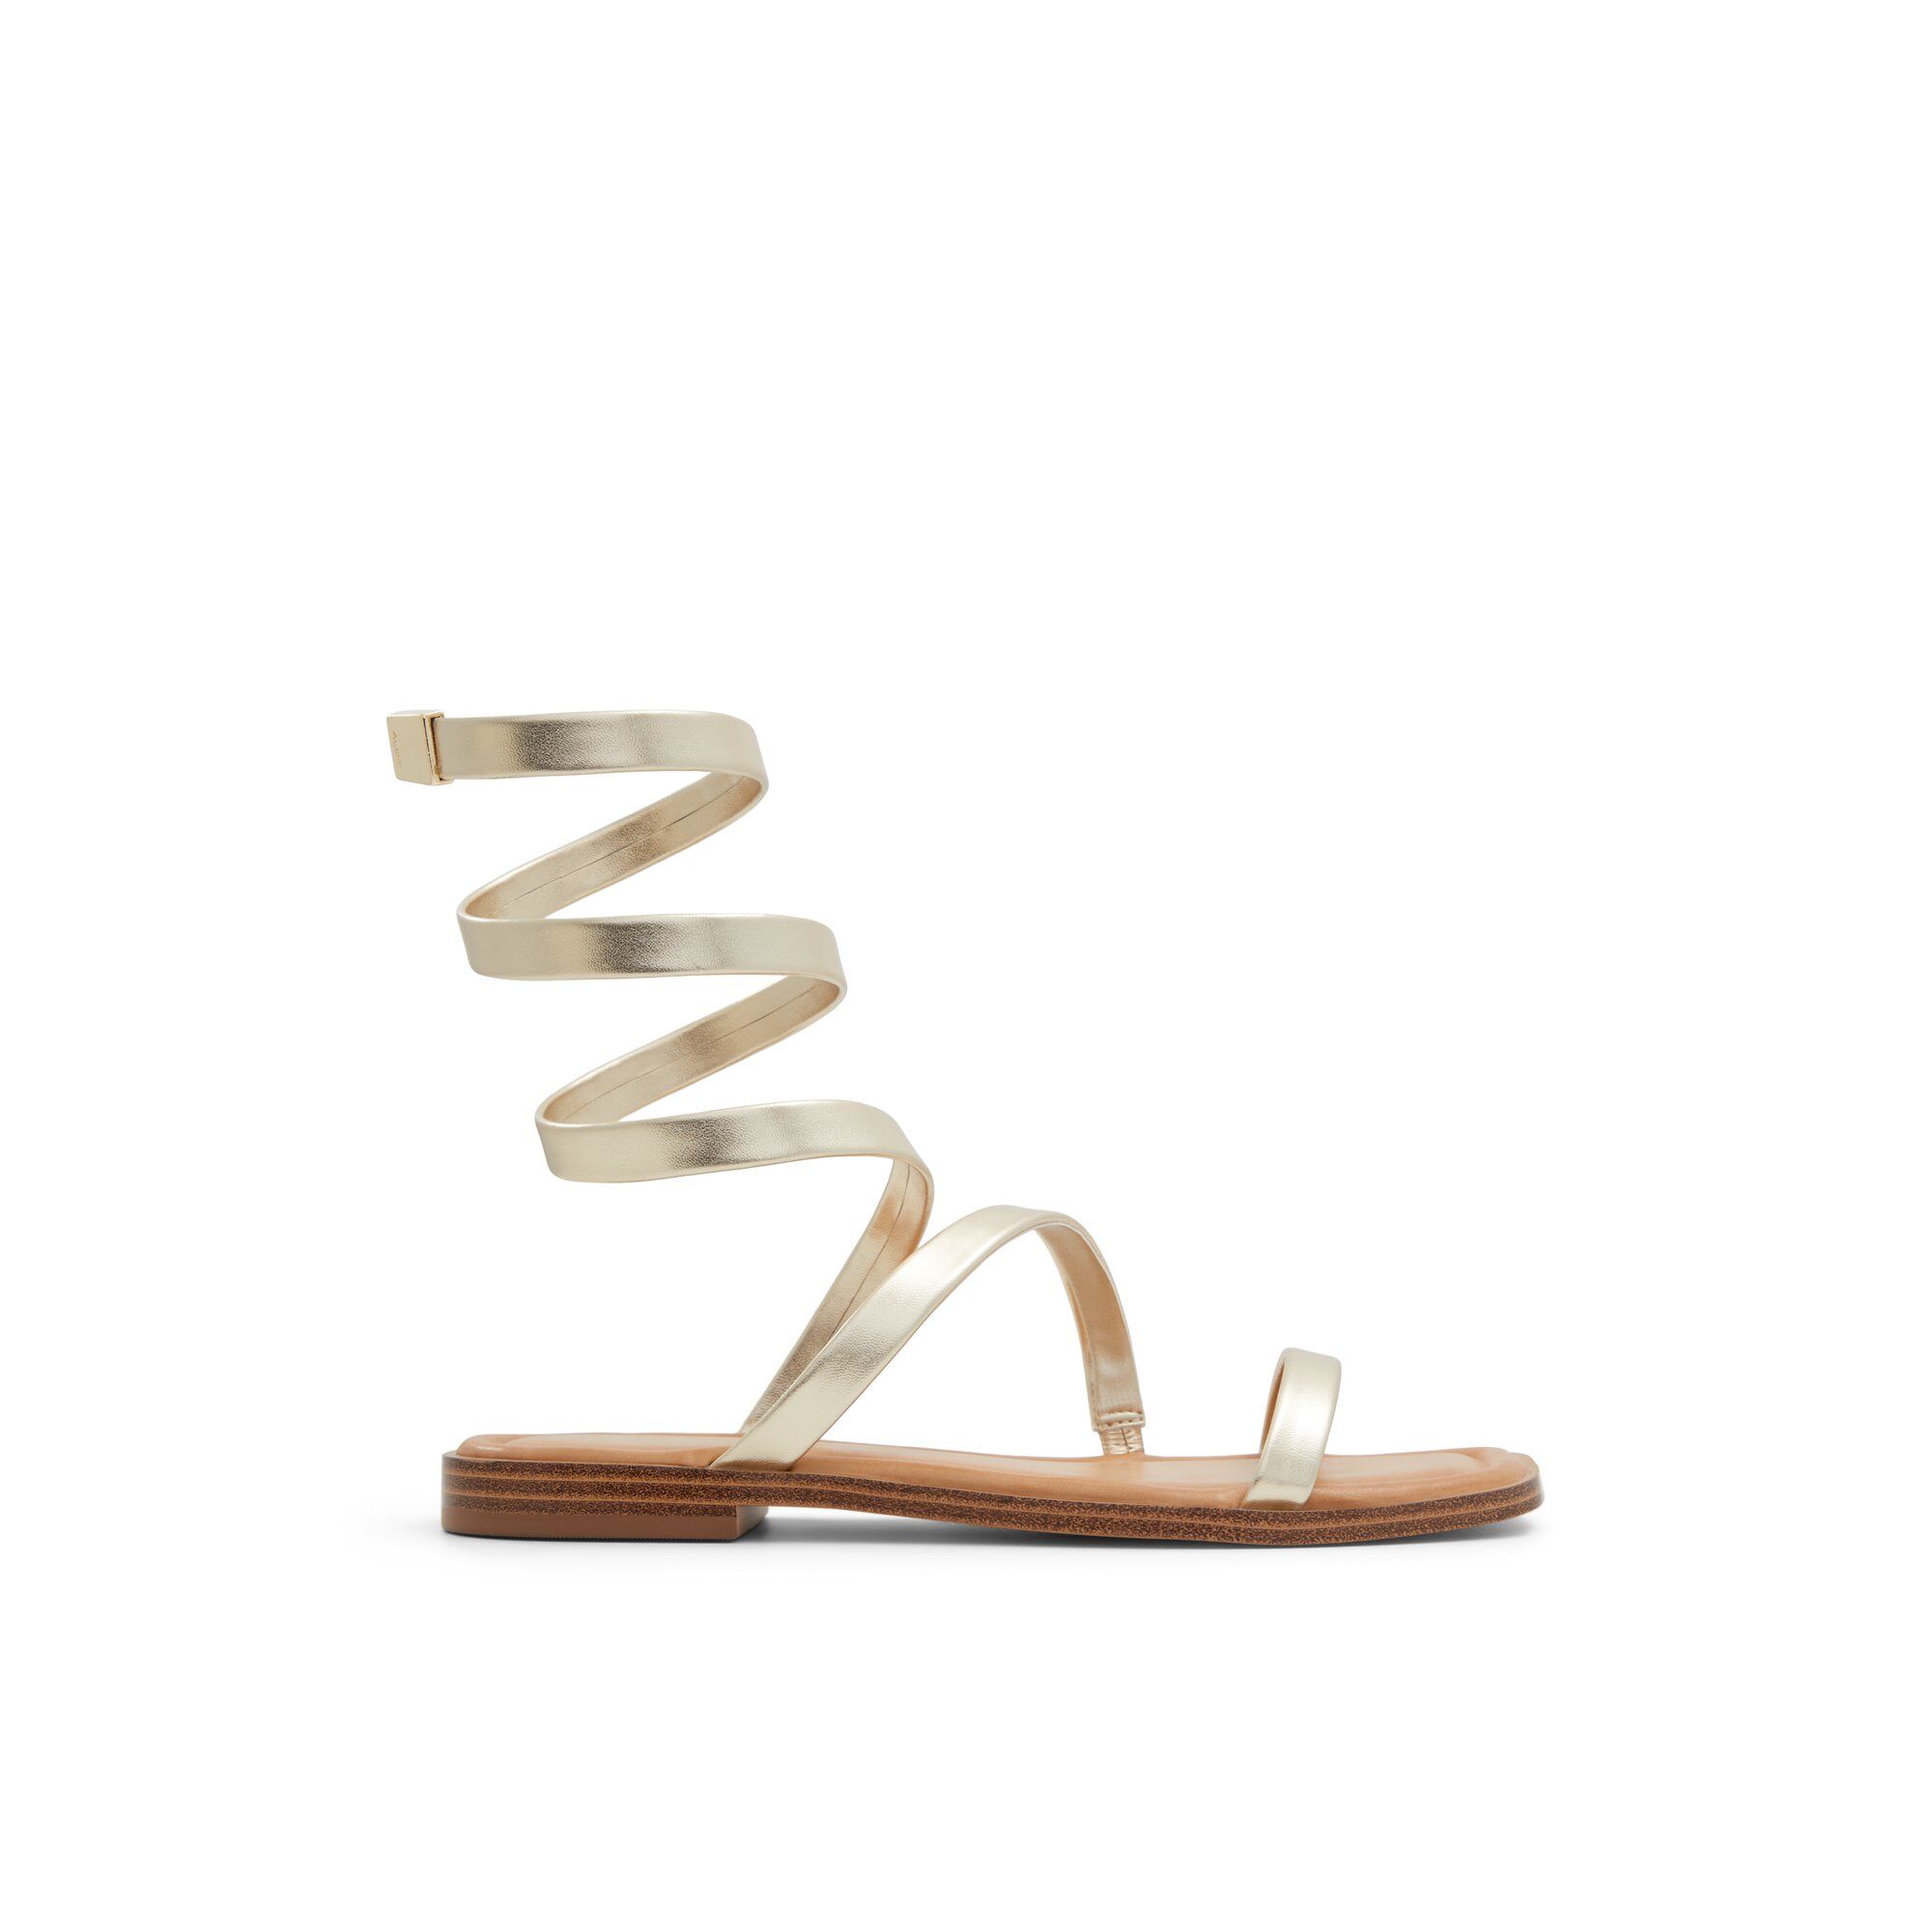 ALDO Spinella - Women's Flat Sandals - Gold, Size 11